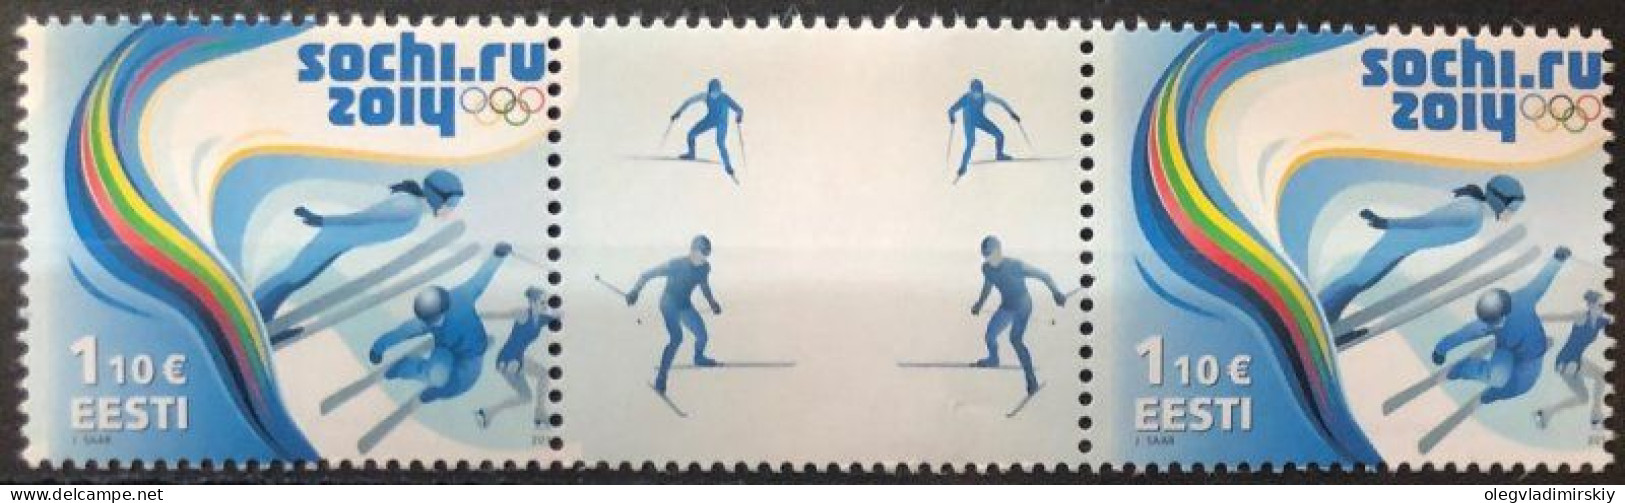 Estonia Estland Estonie 2014 XXII Winter Olympic Games In Sochi Perforation Gutter-pair With Label Mint RARE MNH - Estonie